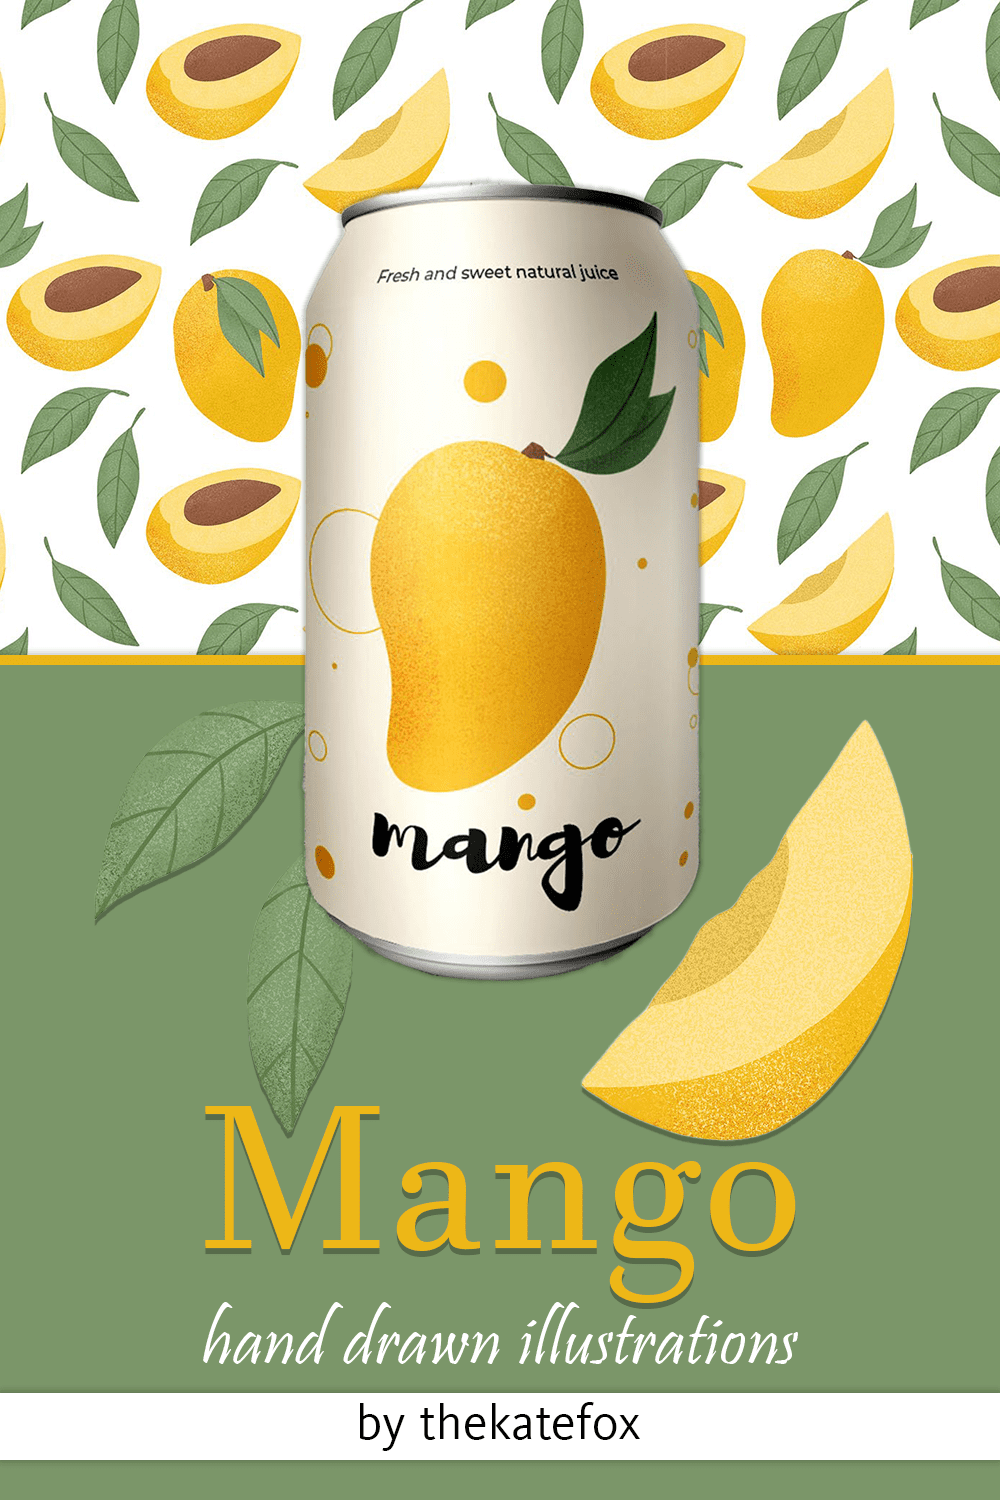 Mango hand drawn illustrations - pinterest image preview.